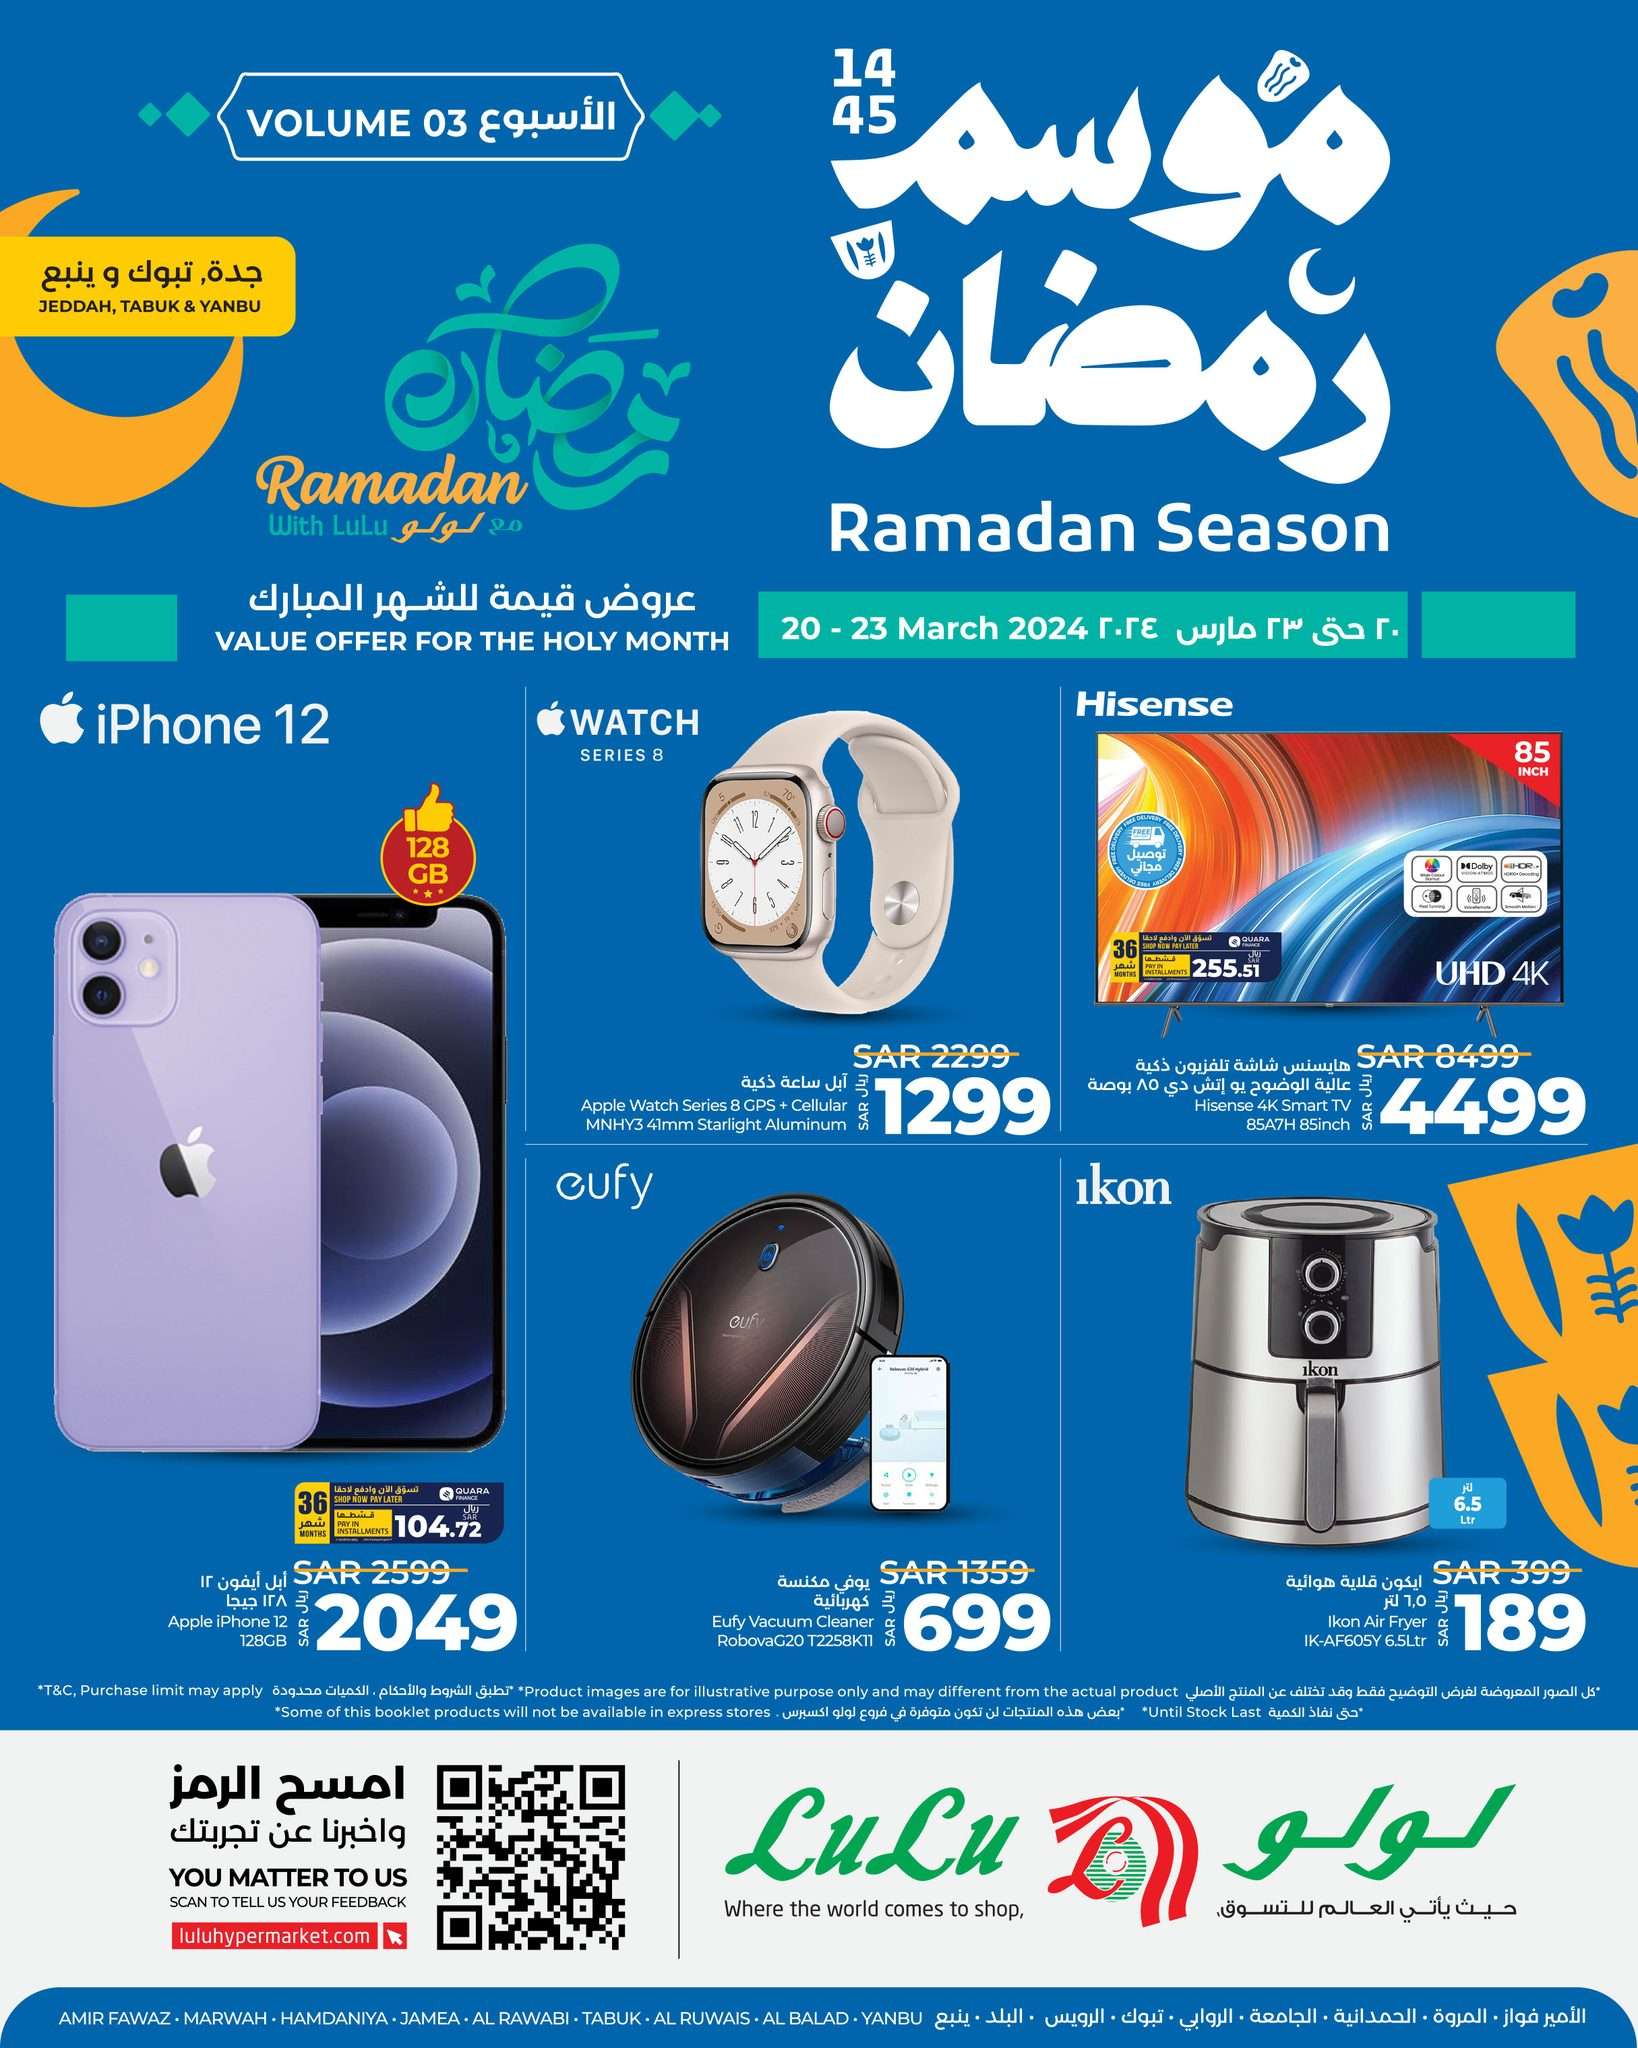 Pl2LGl - عروض رمضان 2024 : عروض لولو جدة صفحة واحدة علي الجوالات و الأجهزة الكهربائية الخميس 11 رمضان 1445 هـ